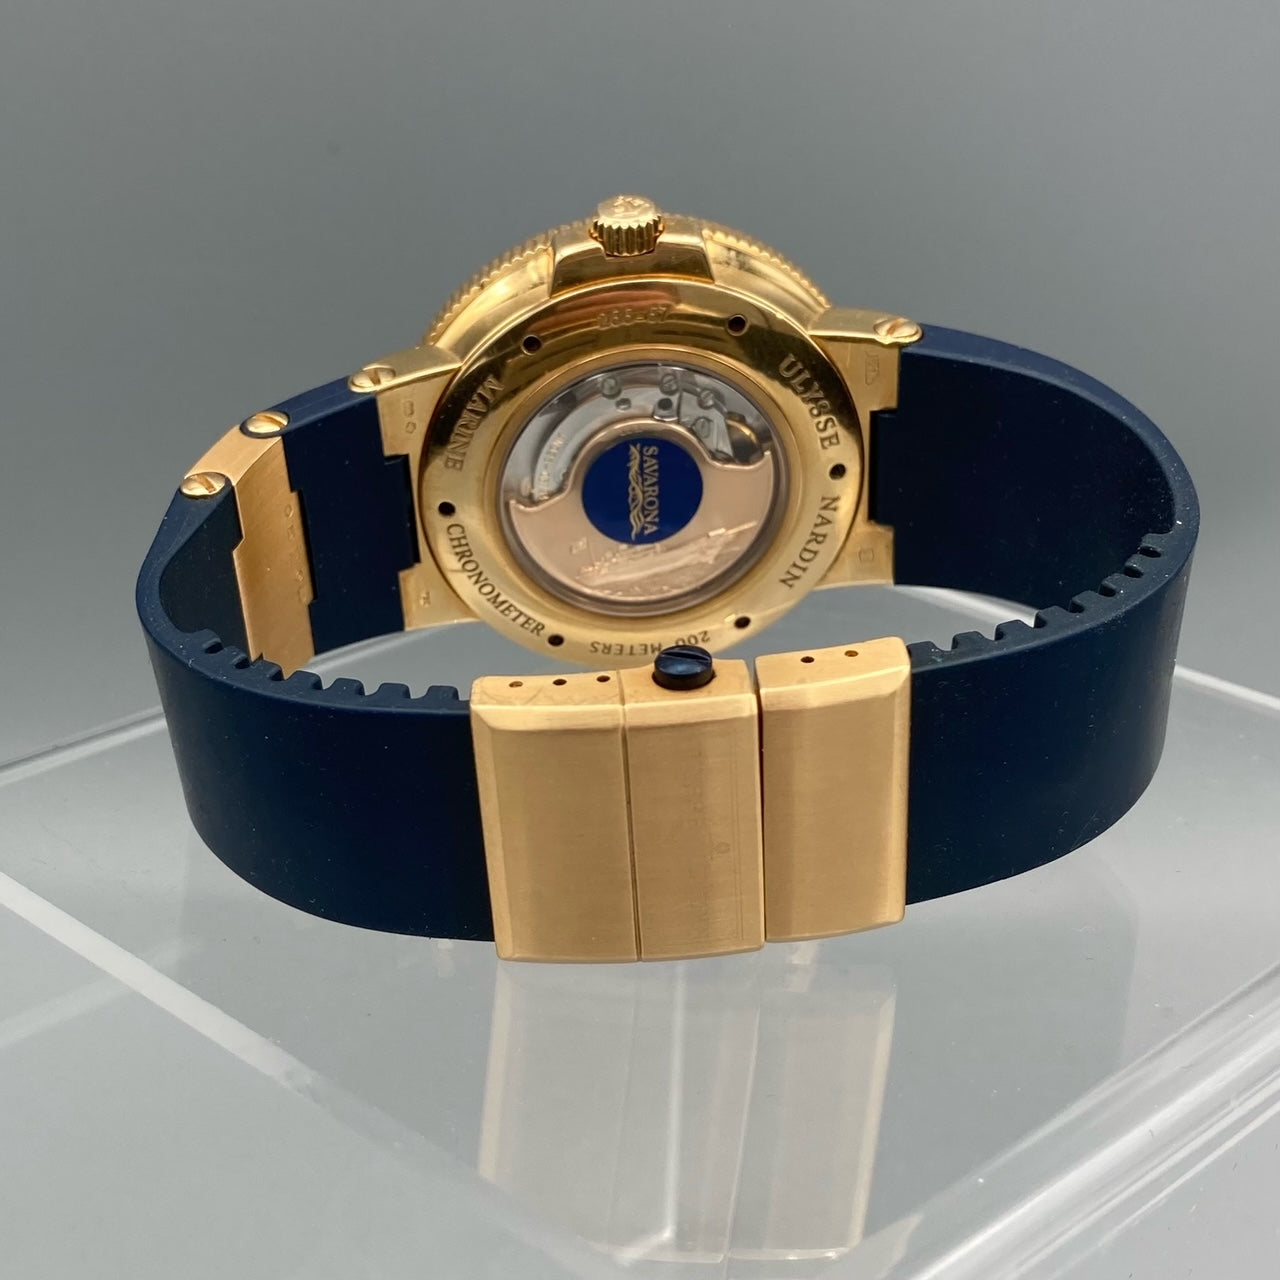 Ulysse Nardin Marine Chronometer Savarona Limited Edition Blue Gold 266-67